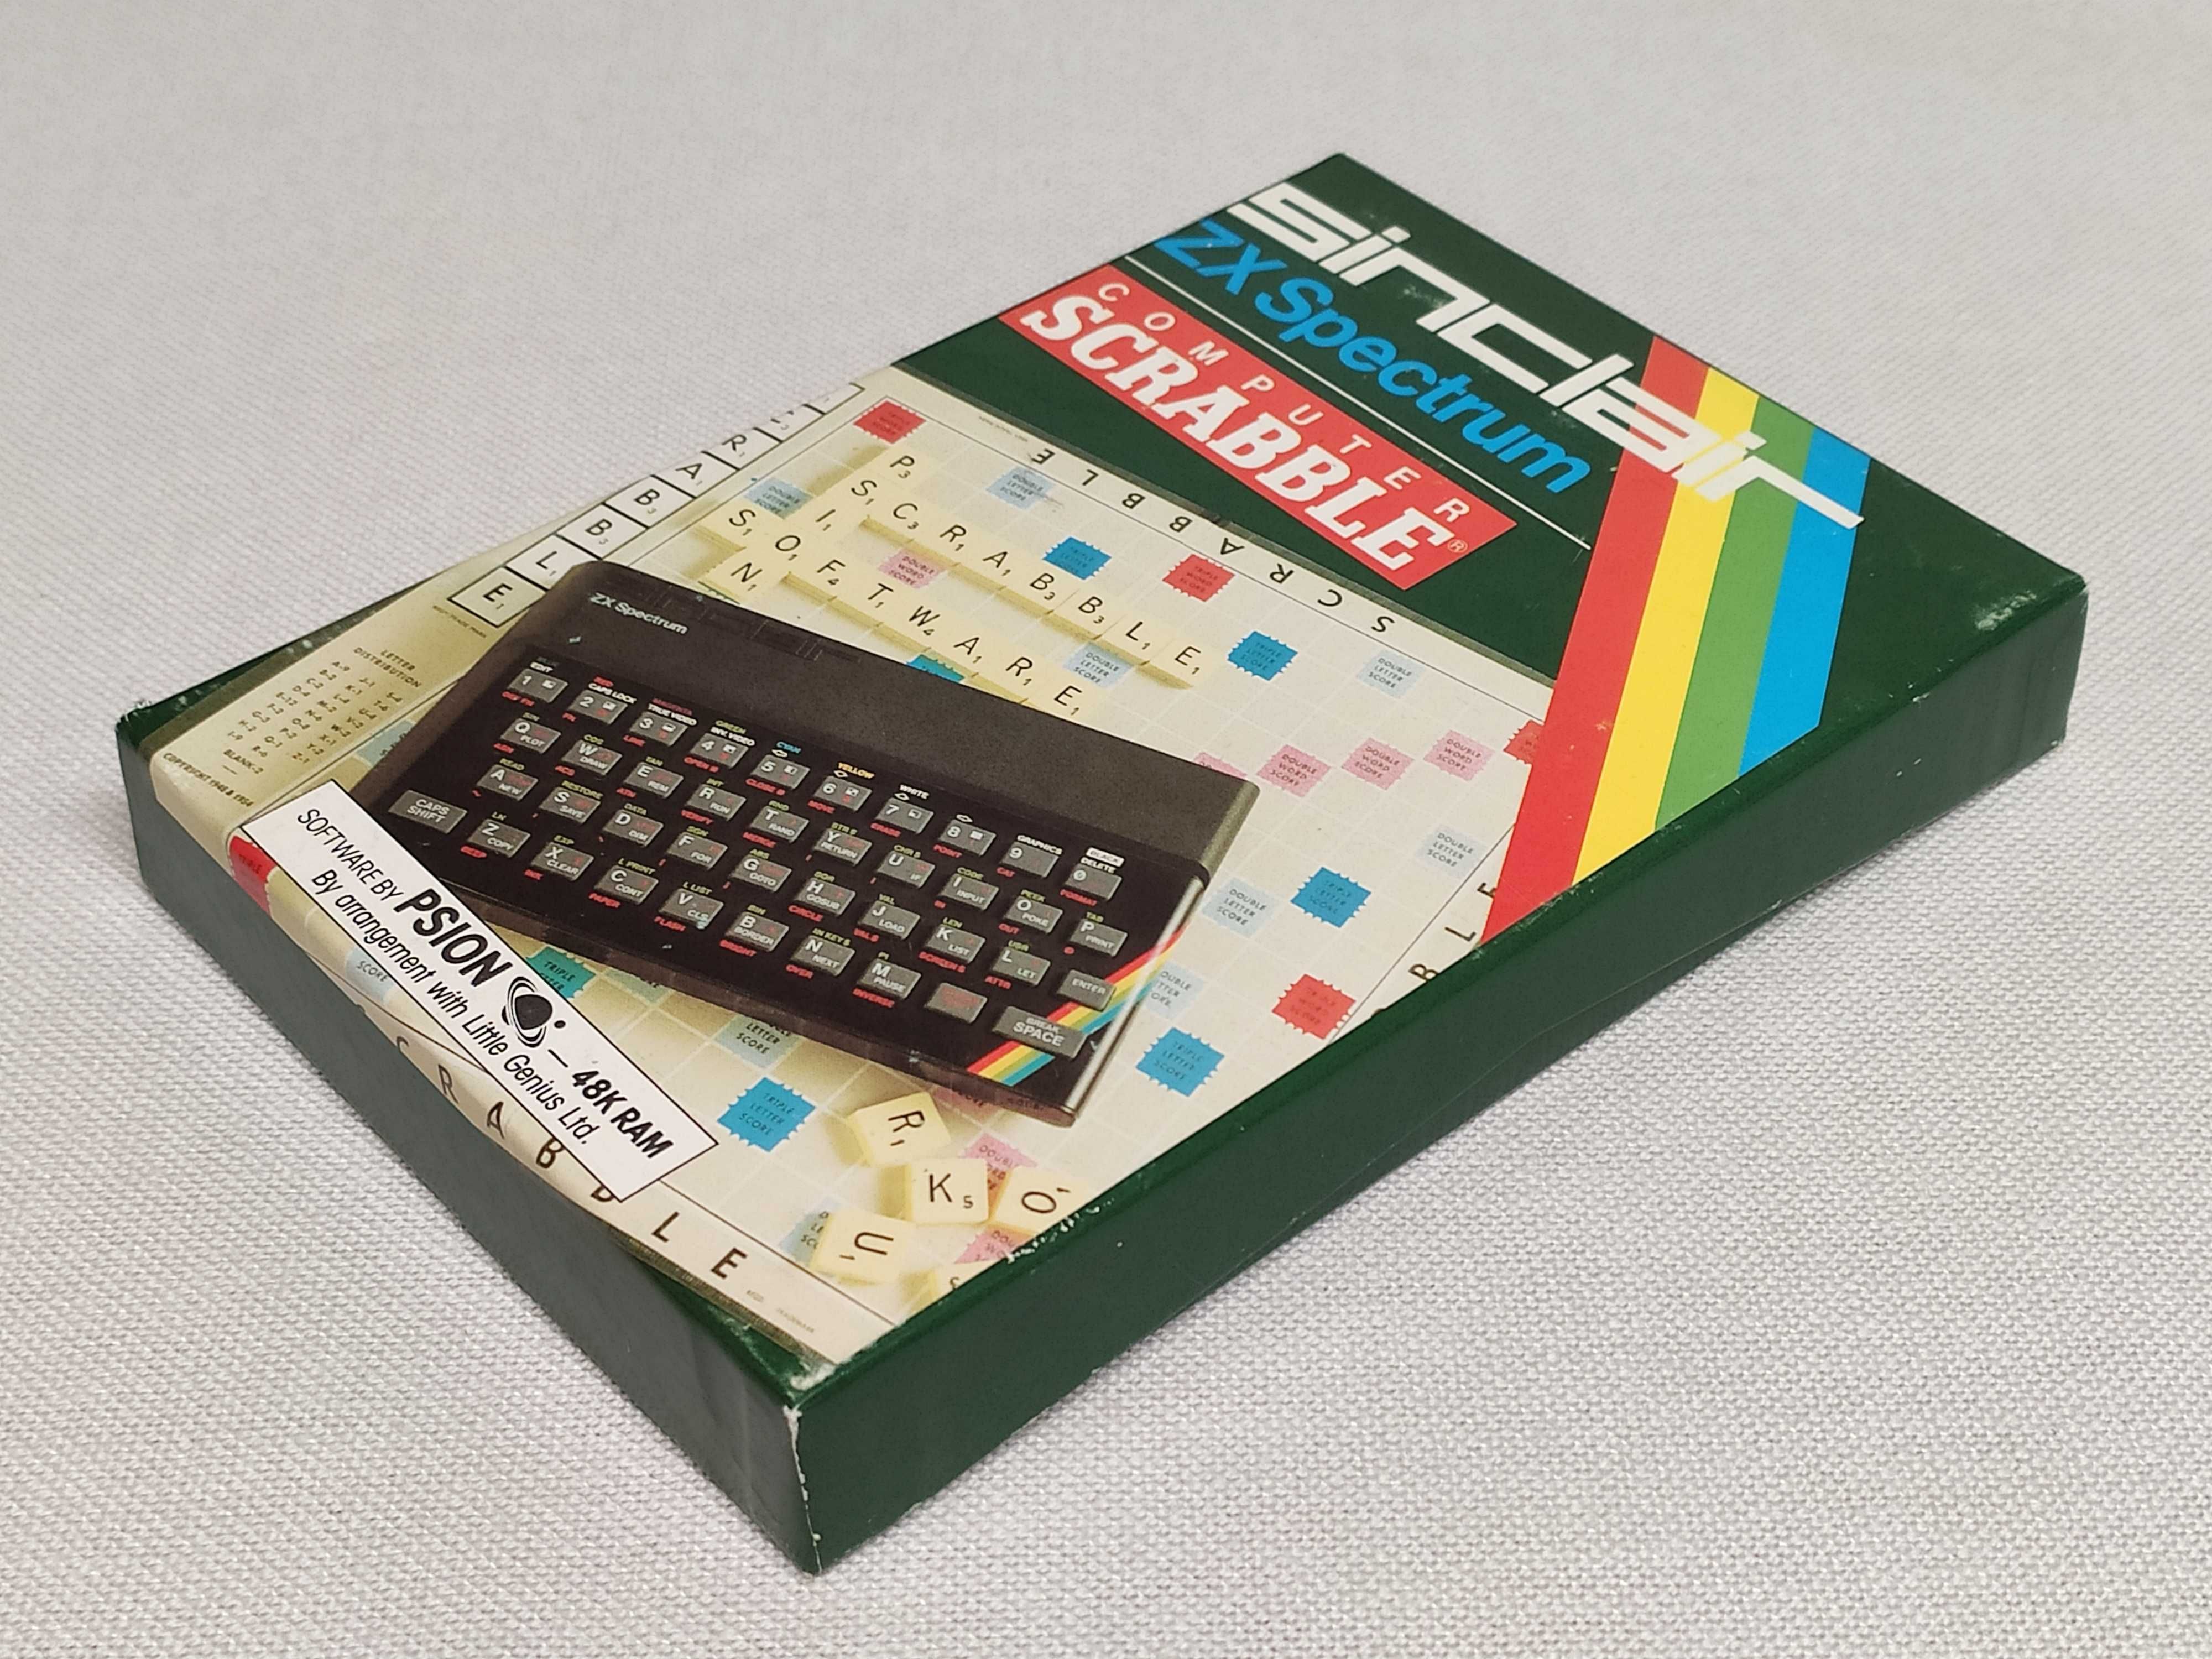 Program Scrabble dla ZX Spectrum Sinclair Box Retro